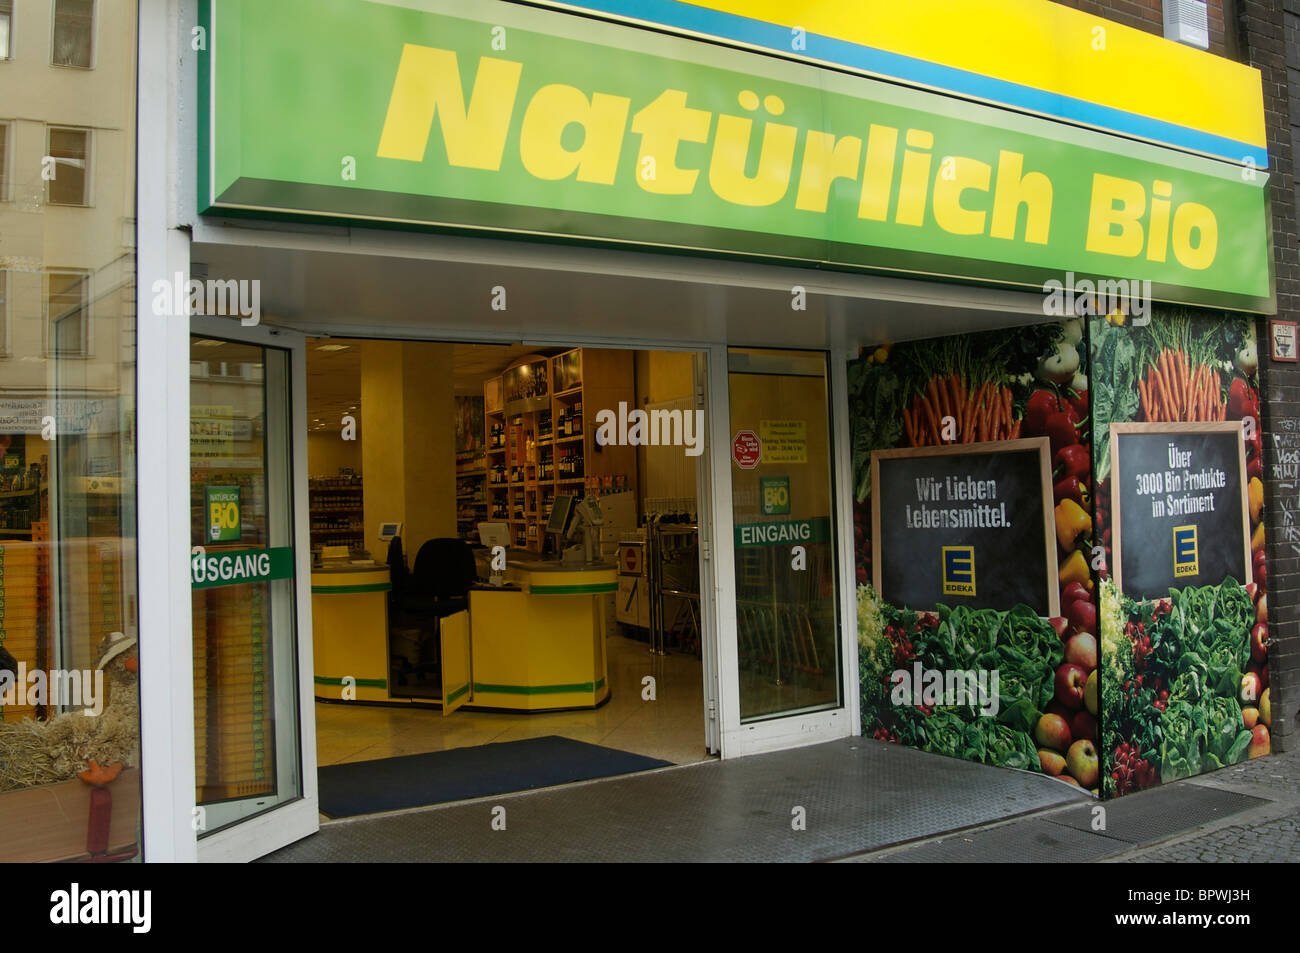 A Naturlich Bio Shop, Organic food shop in Berlin Stock Photo - Alamy